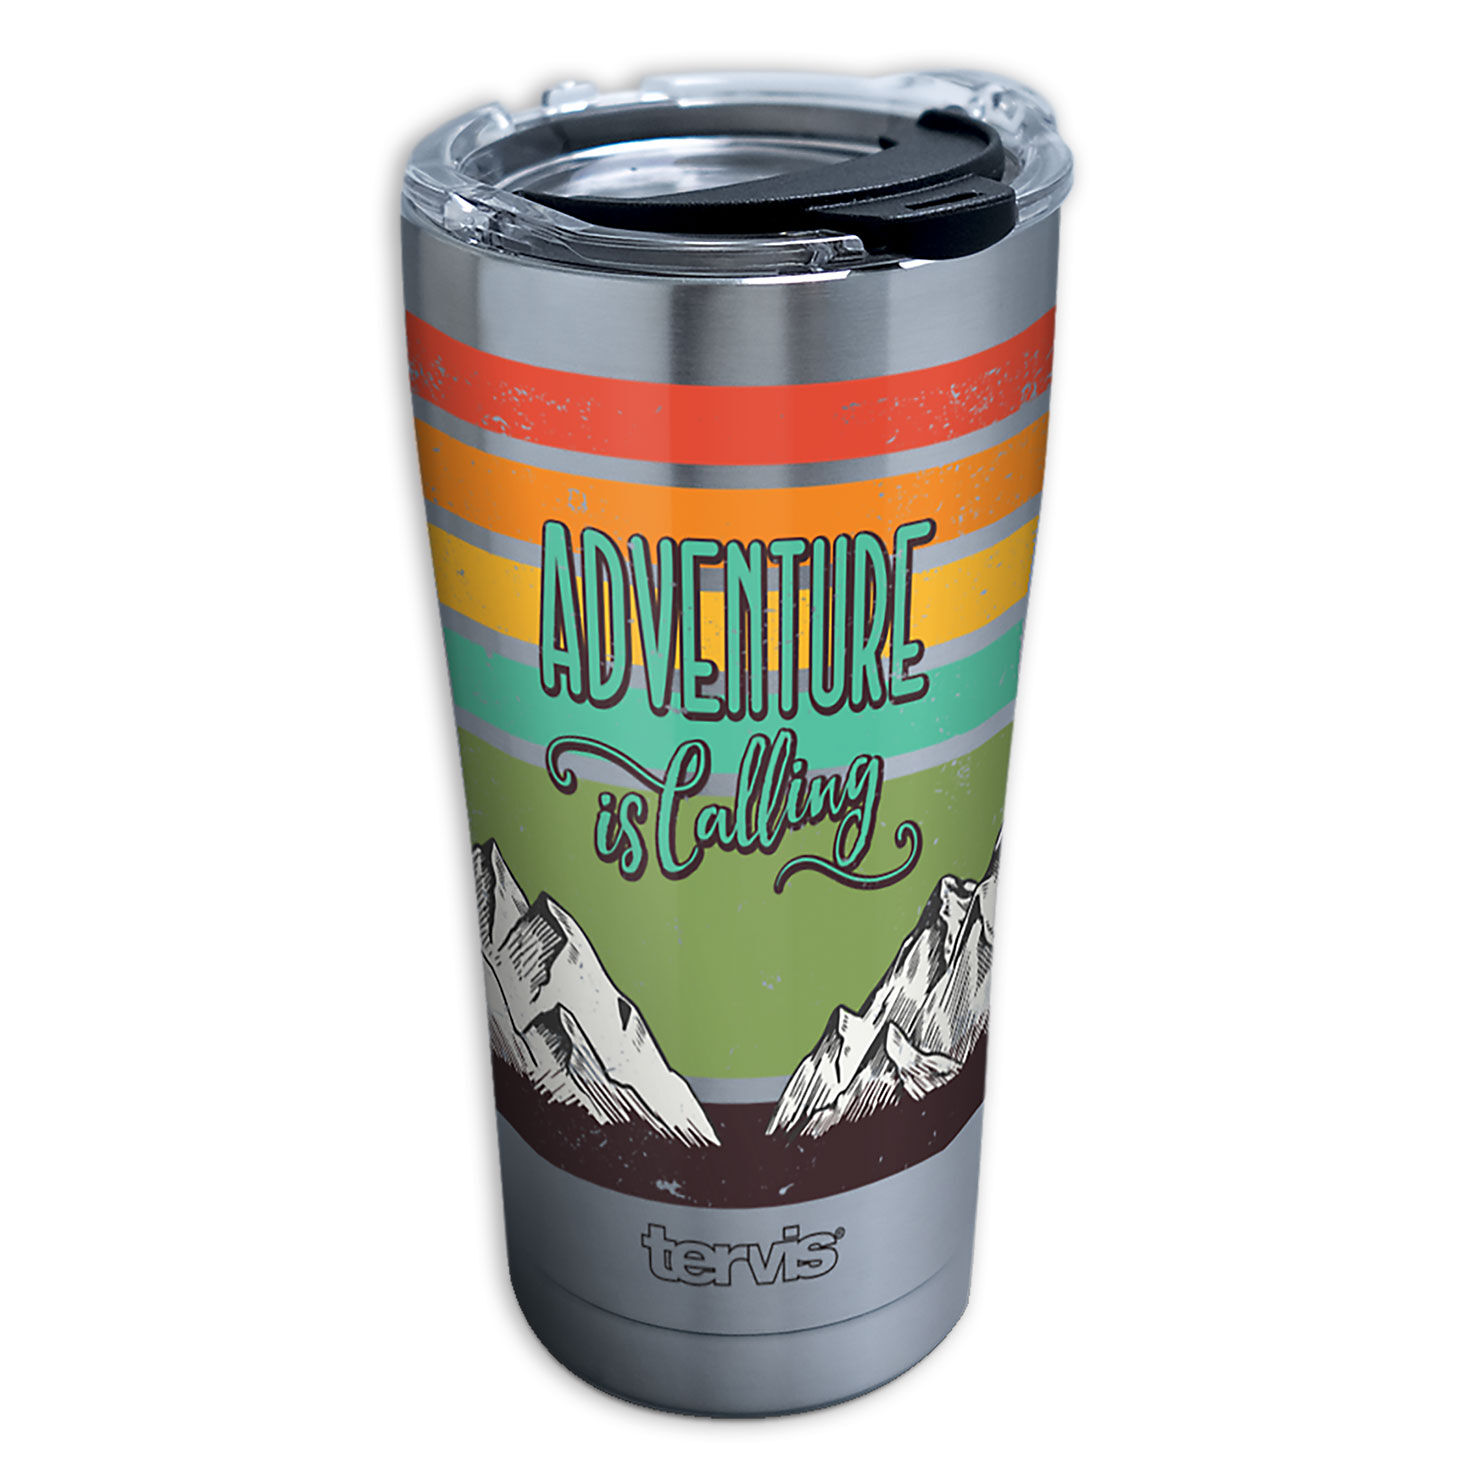 Stainless Steel Coffee Mug Set of 2-14 oz Premium Double Wall Insulated  Travel Mugs - Shatterproof, BPA Free, Dishwasher Safe